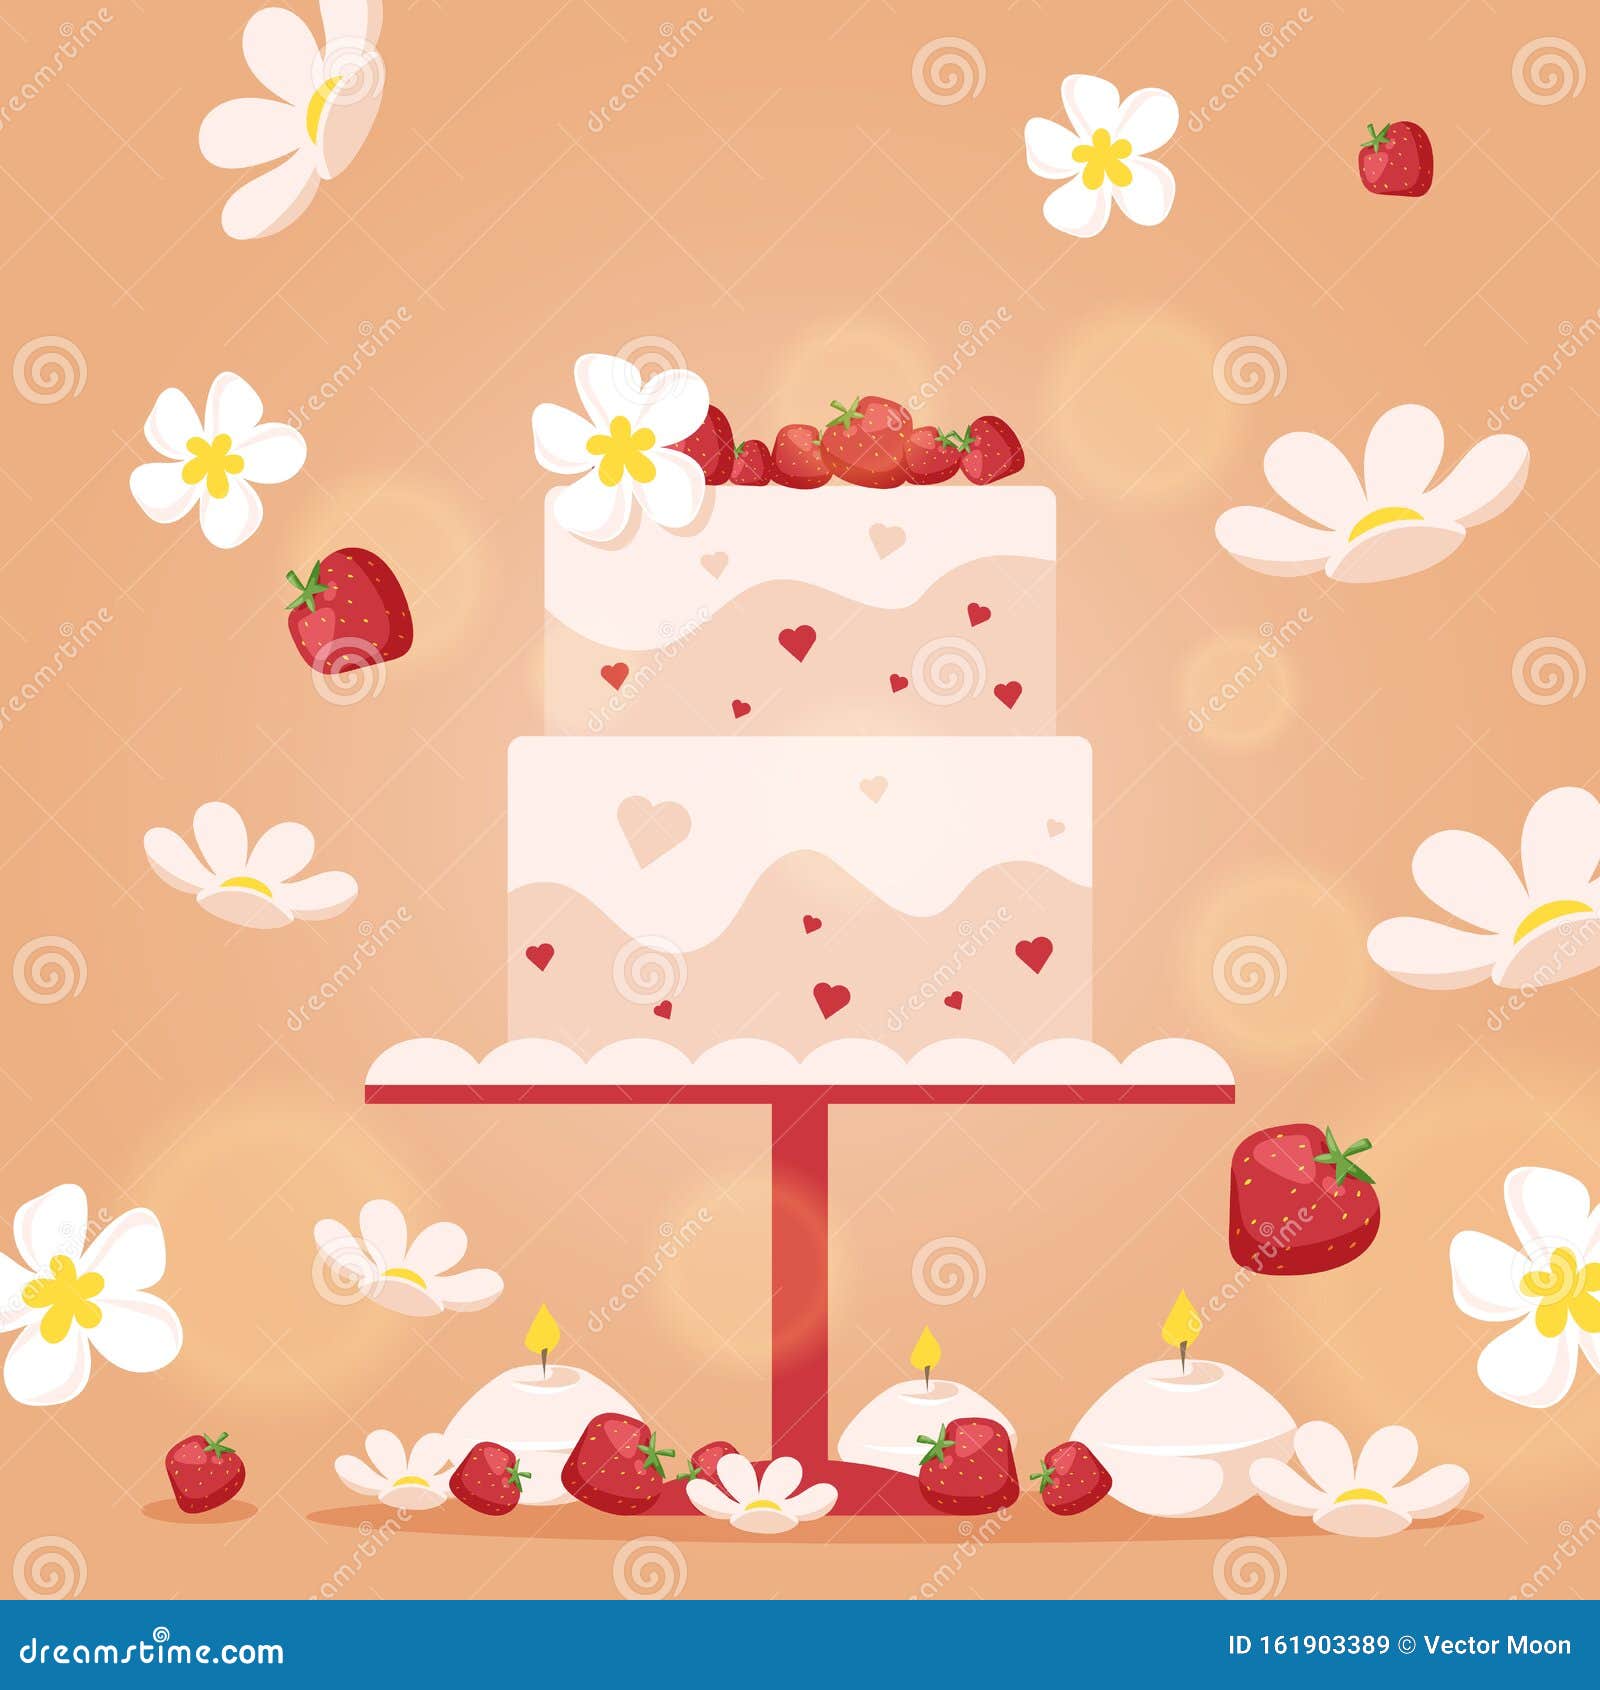 Update more than 75 present wedding cake super hot  indaotaonec